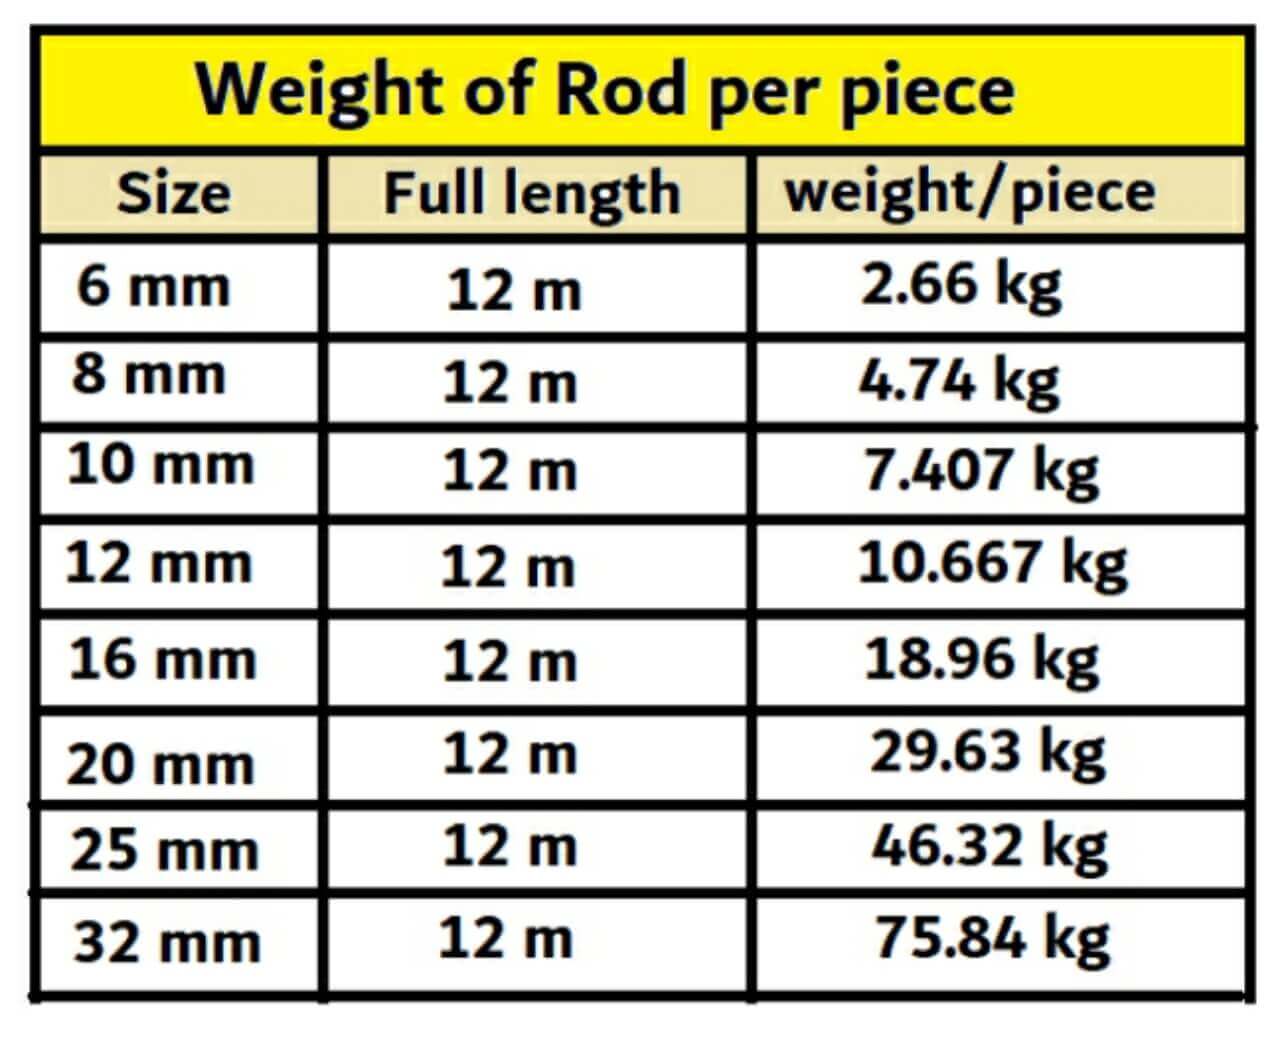 Steel rod weight per piece (6mm, 8mm, 10mm, 12mm, 16mm & 20mm)